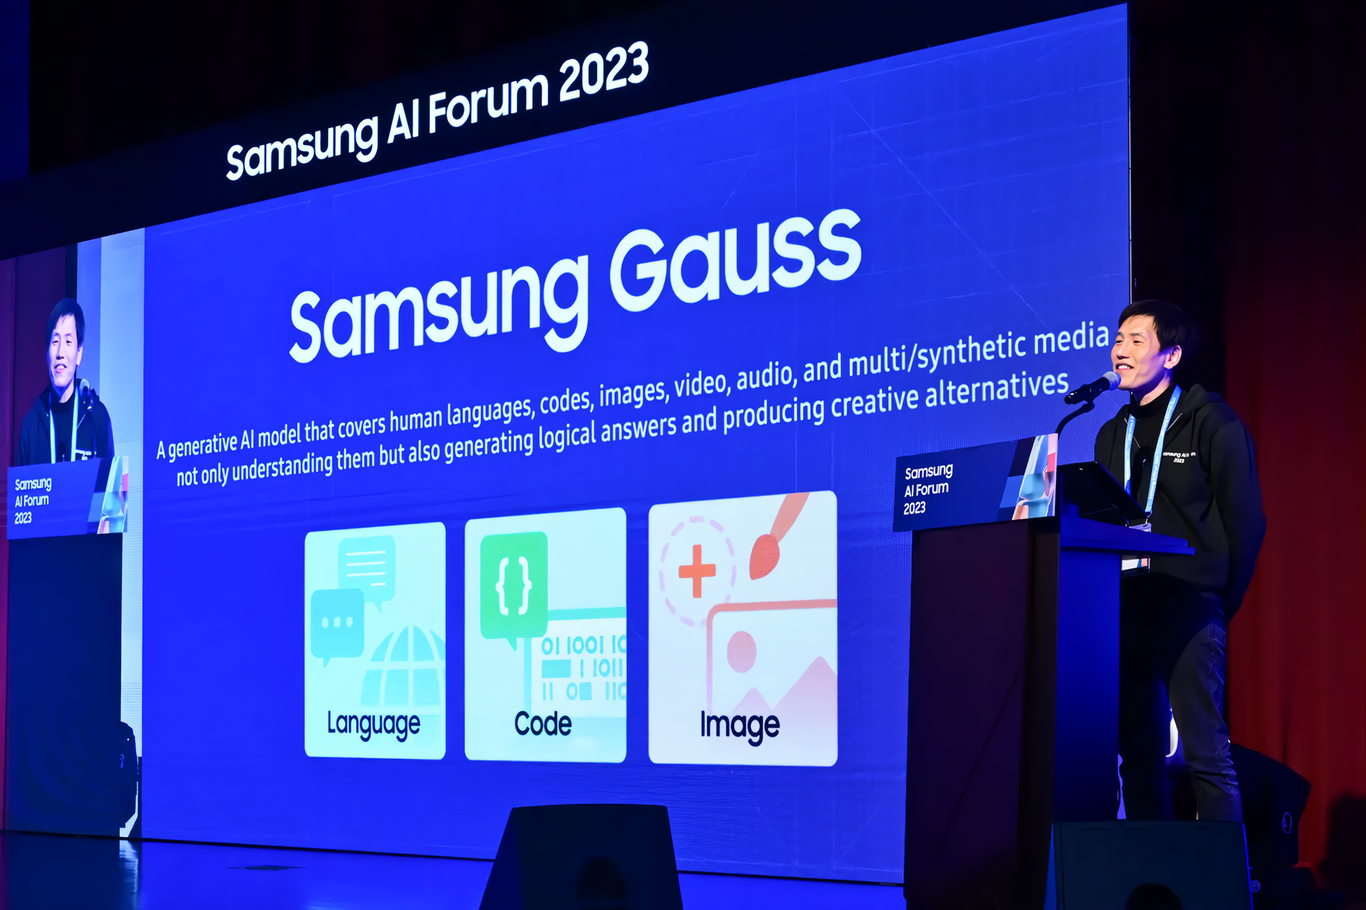 Samsung Galaxy AI Live: Conferencia Samgun GAUSS